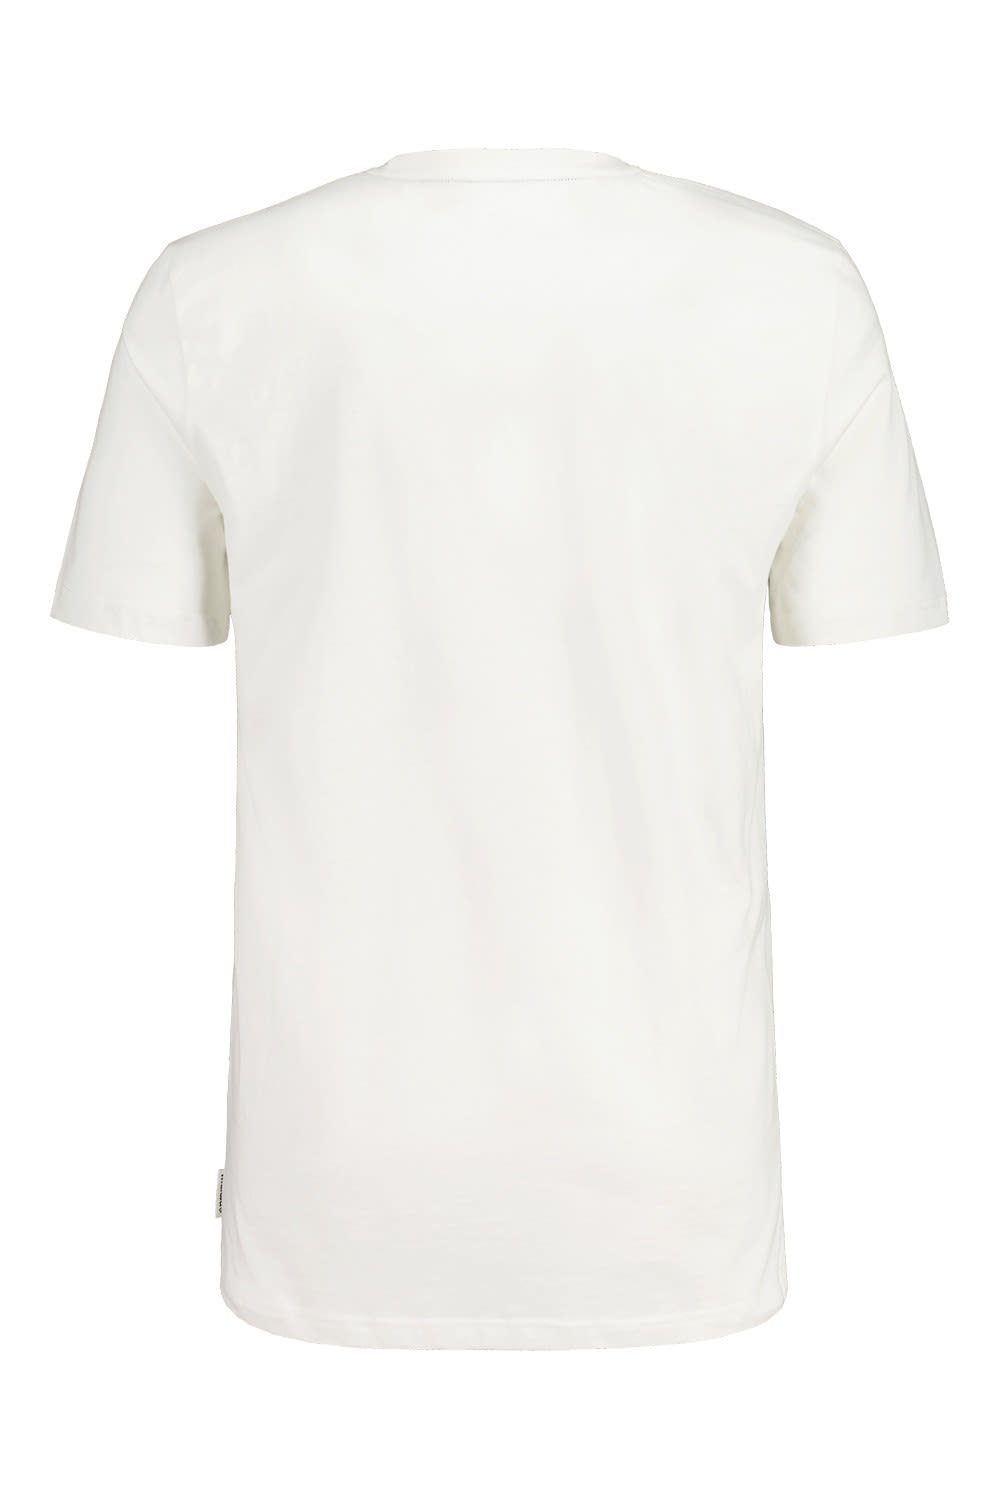 Maloja T-Shirt Milk T-shirt Herren Glacier M Kurzarm-Shirt Maloja Kapfm